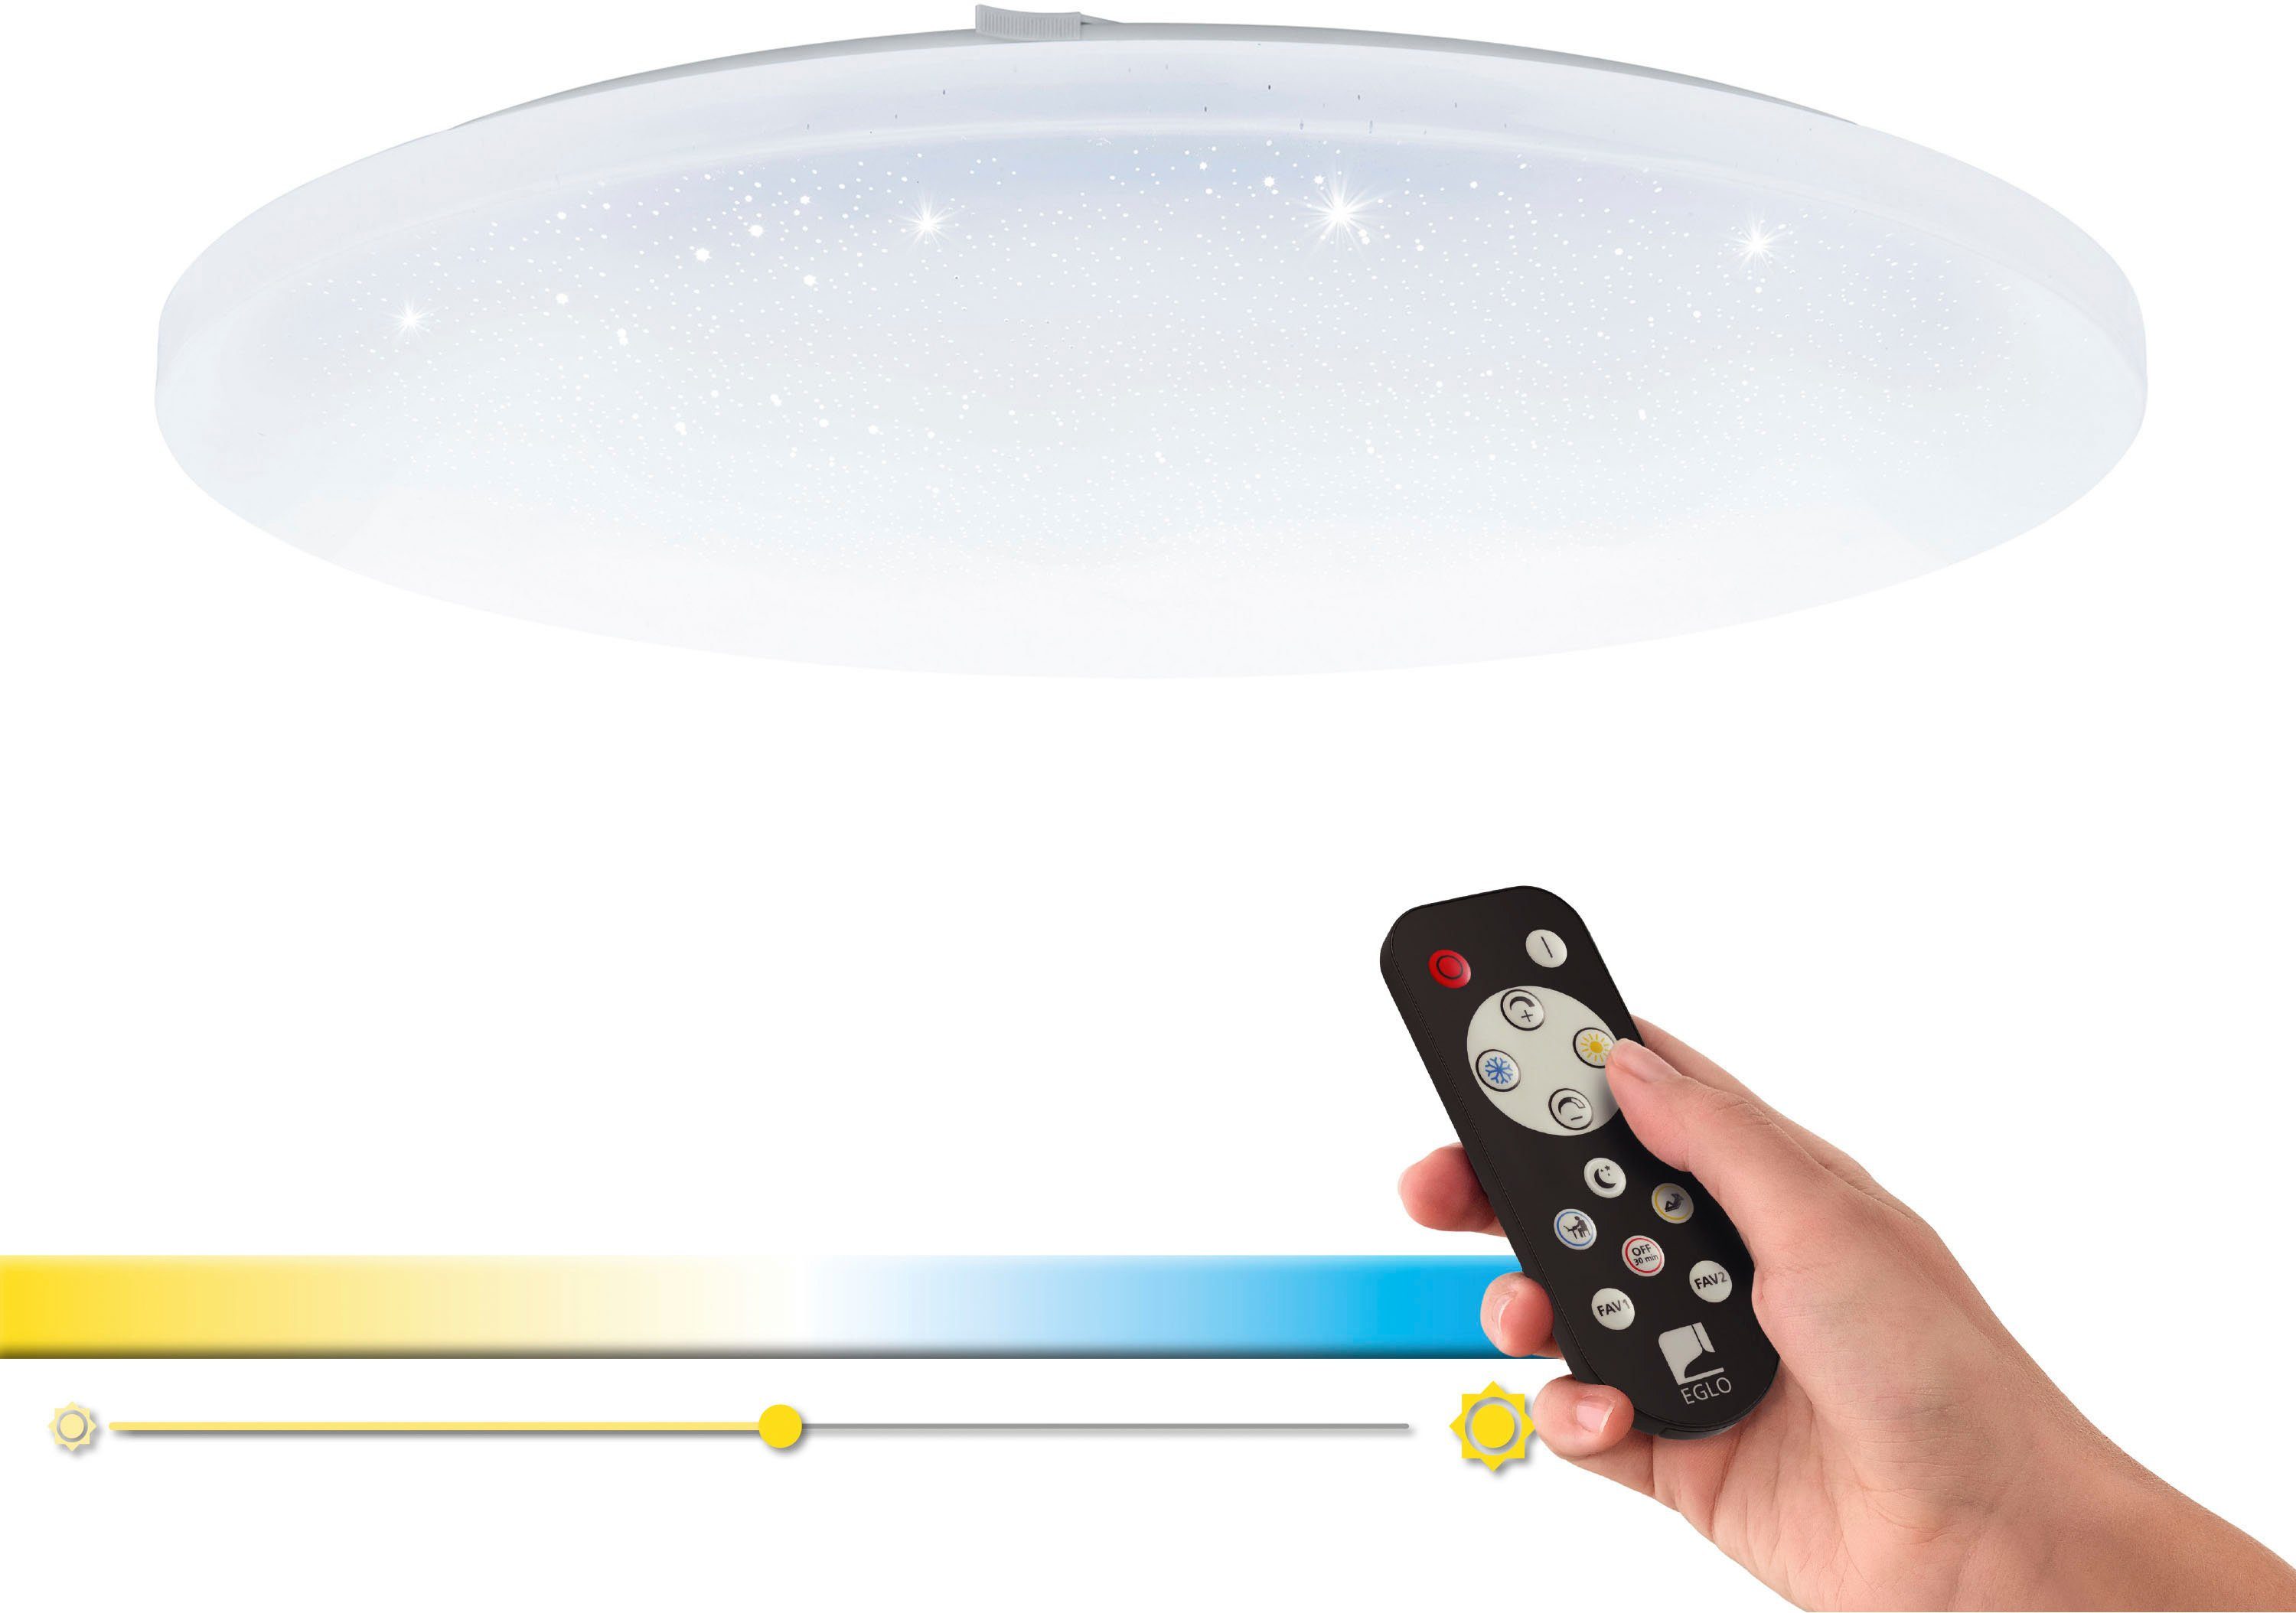 EGLO Plafondlamp FRANIA-A wit / ø57 x h7,5 cm / inclusief 1x led-plank (elk 32,5w, 3900lm, 2700-6500k) / cct kleurtemperatuurbediening - dimbaar - nachtlampfunctie - met afstandsbe